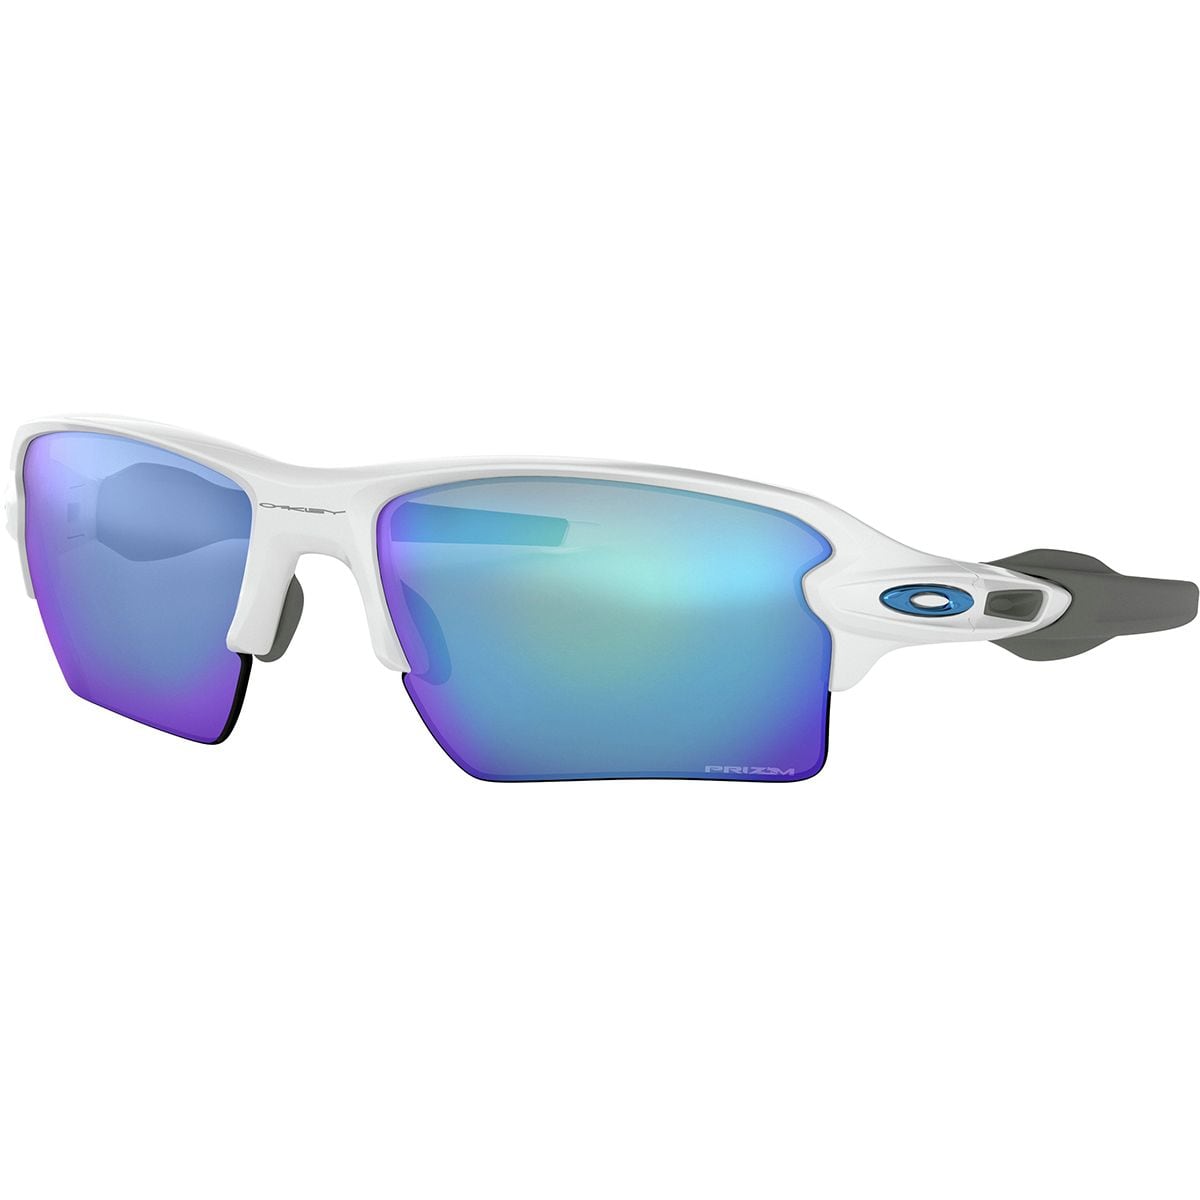 Oakley Flak 2.0 XL Prizm Sunglasses Polished White/Prizm Sapphire, One Size - Men's -  0OO9188-91889459-59